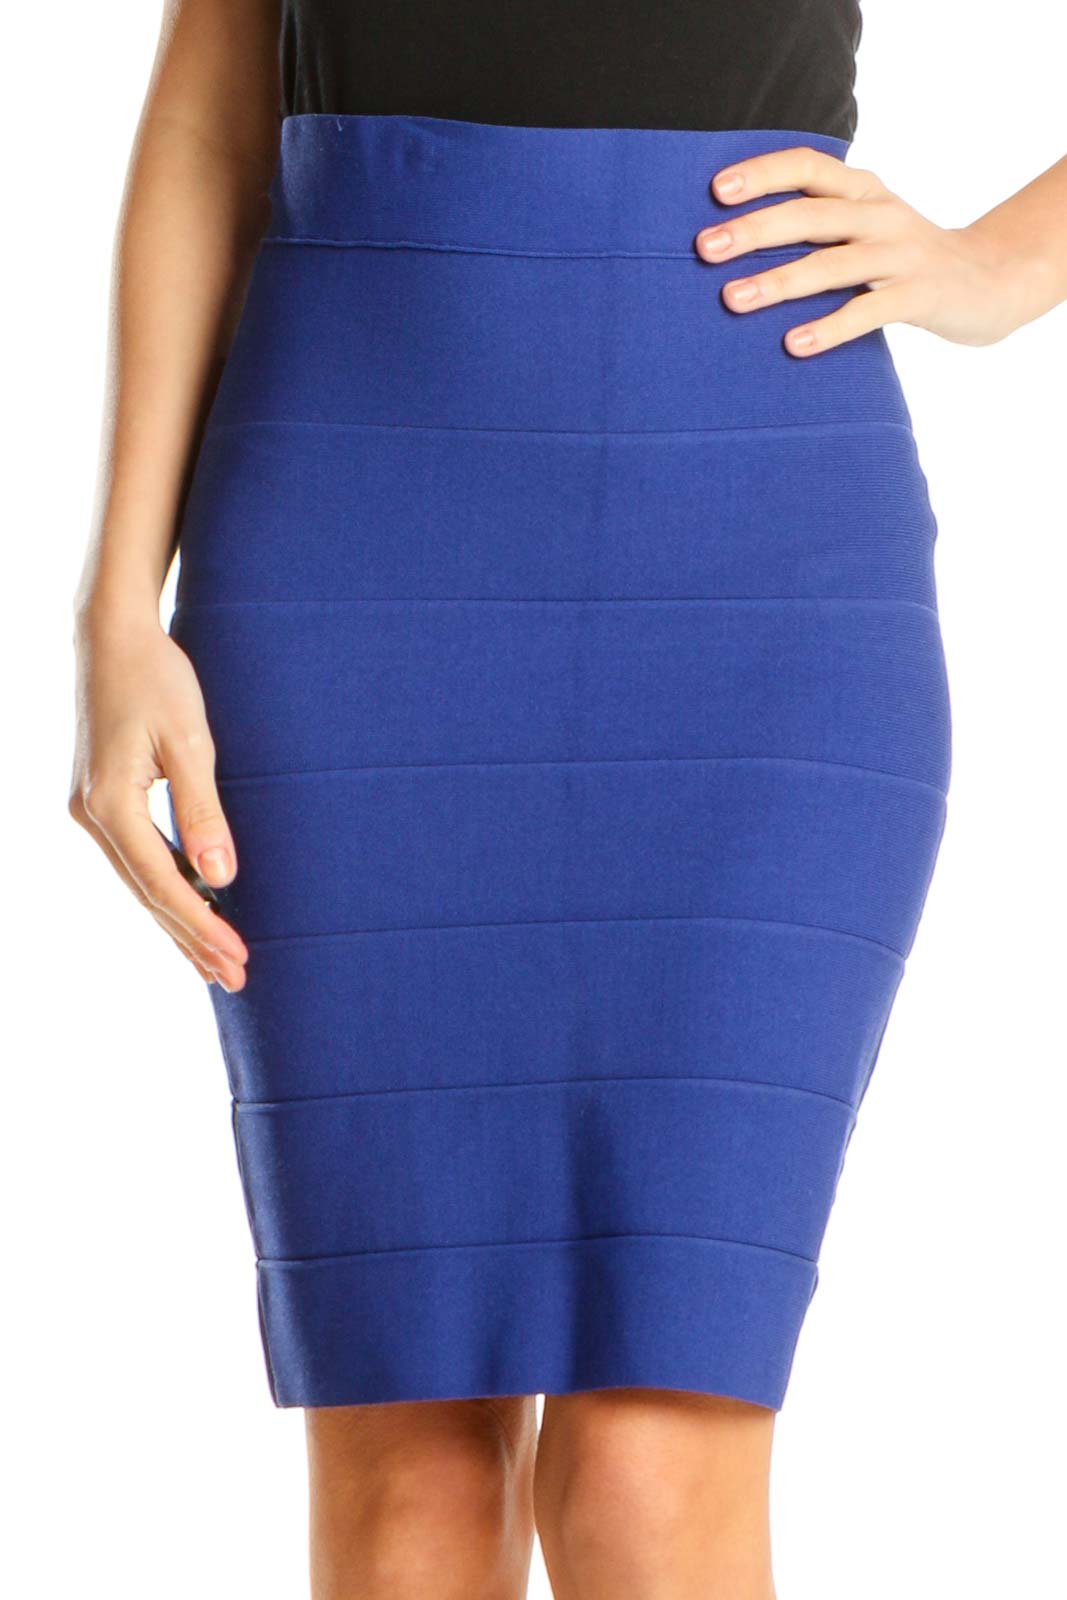 Blue Brunch Pencil Skirt Front